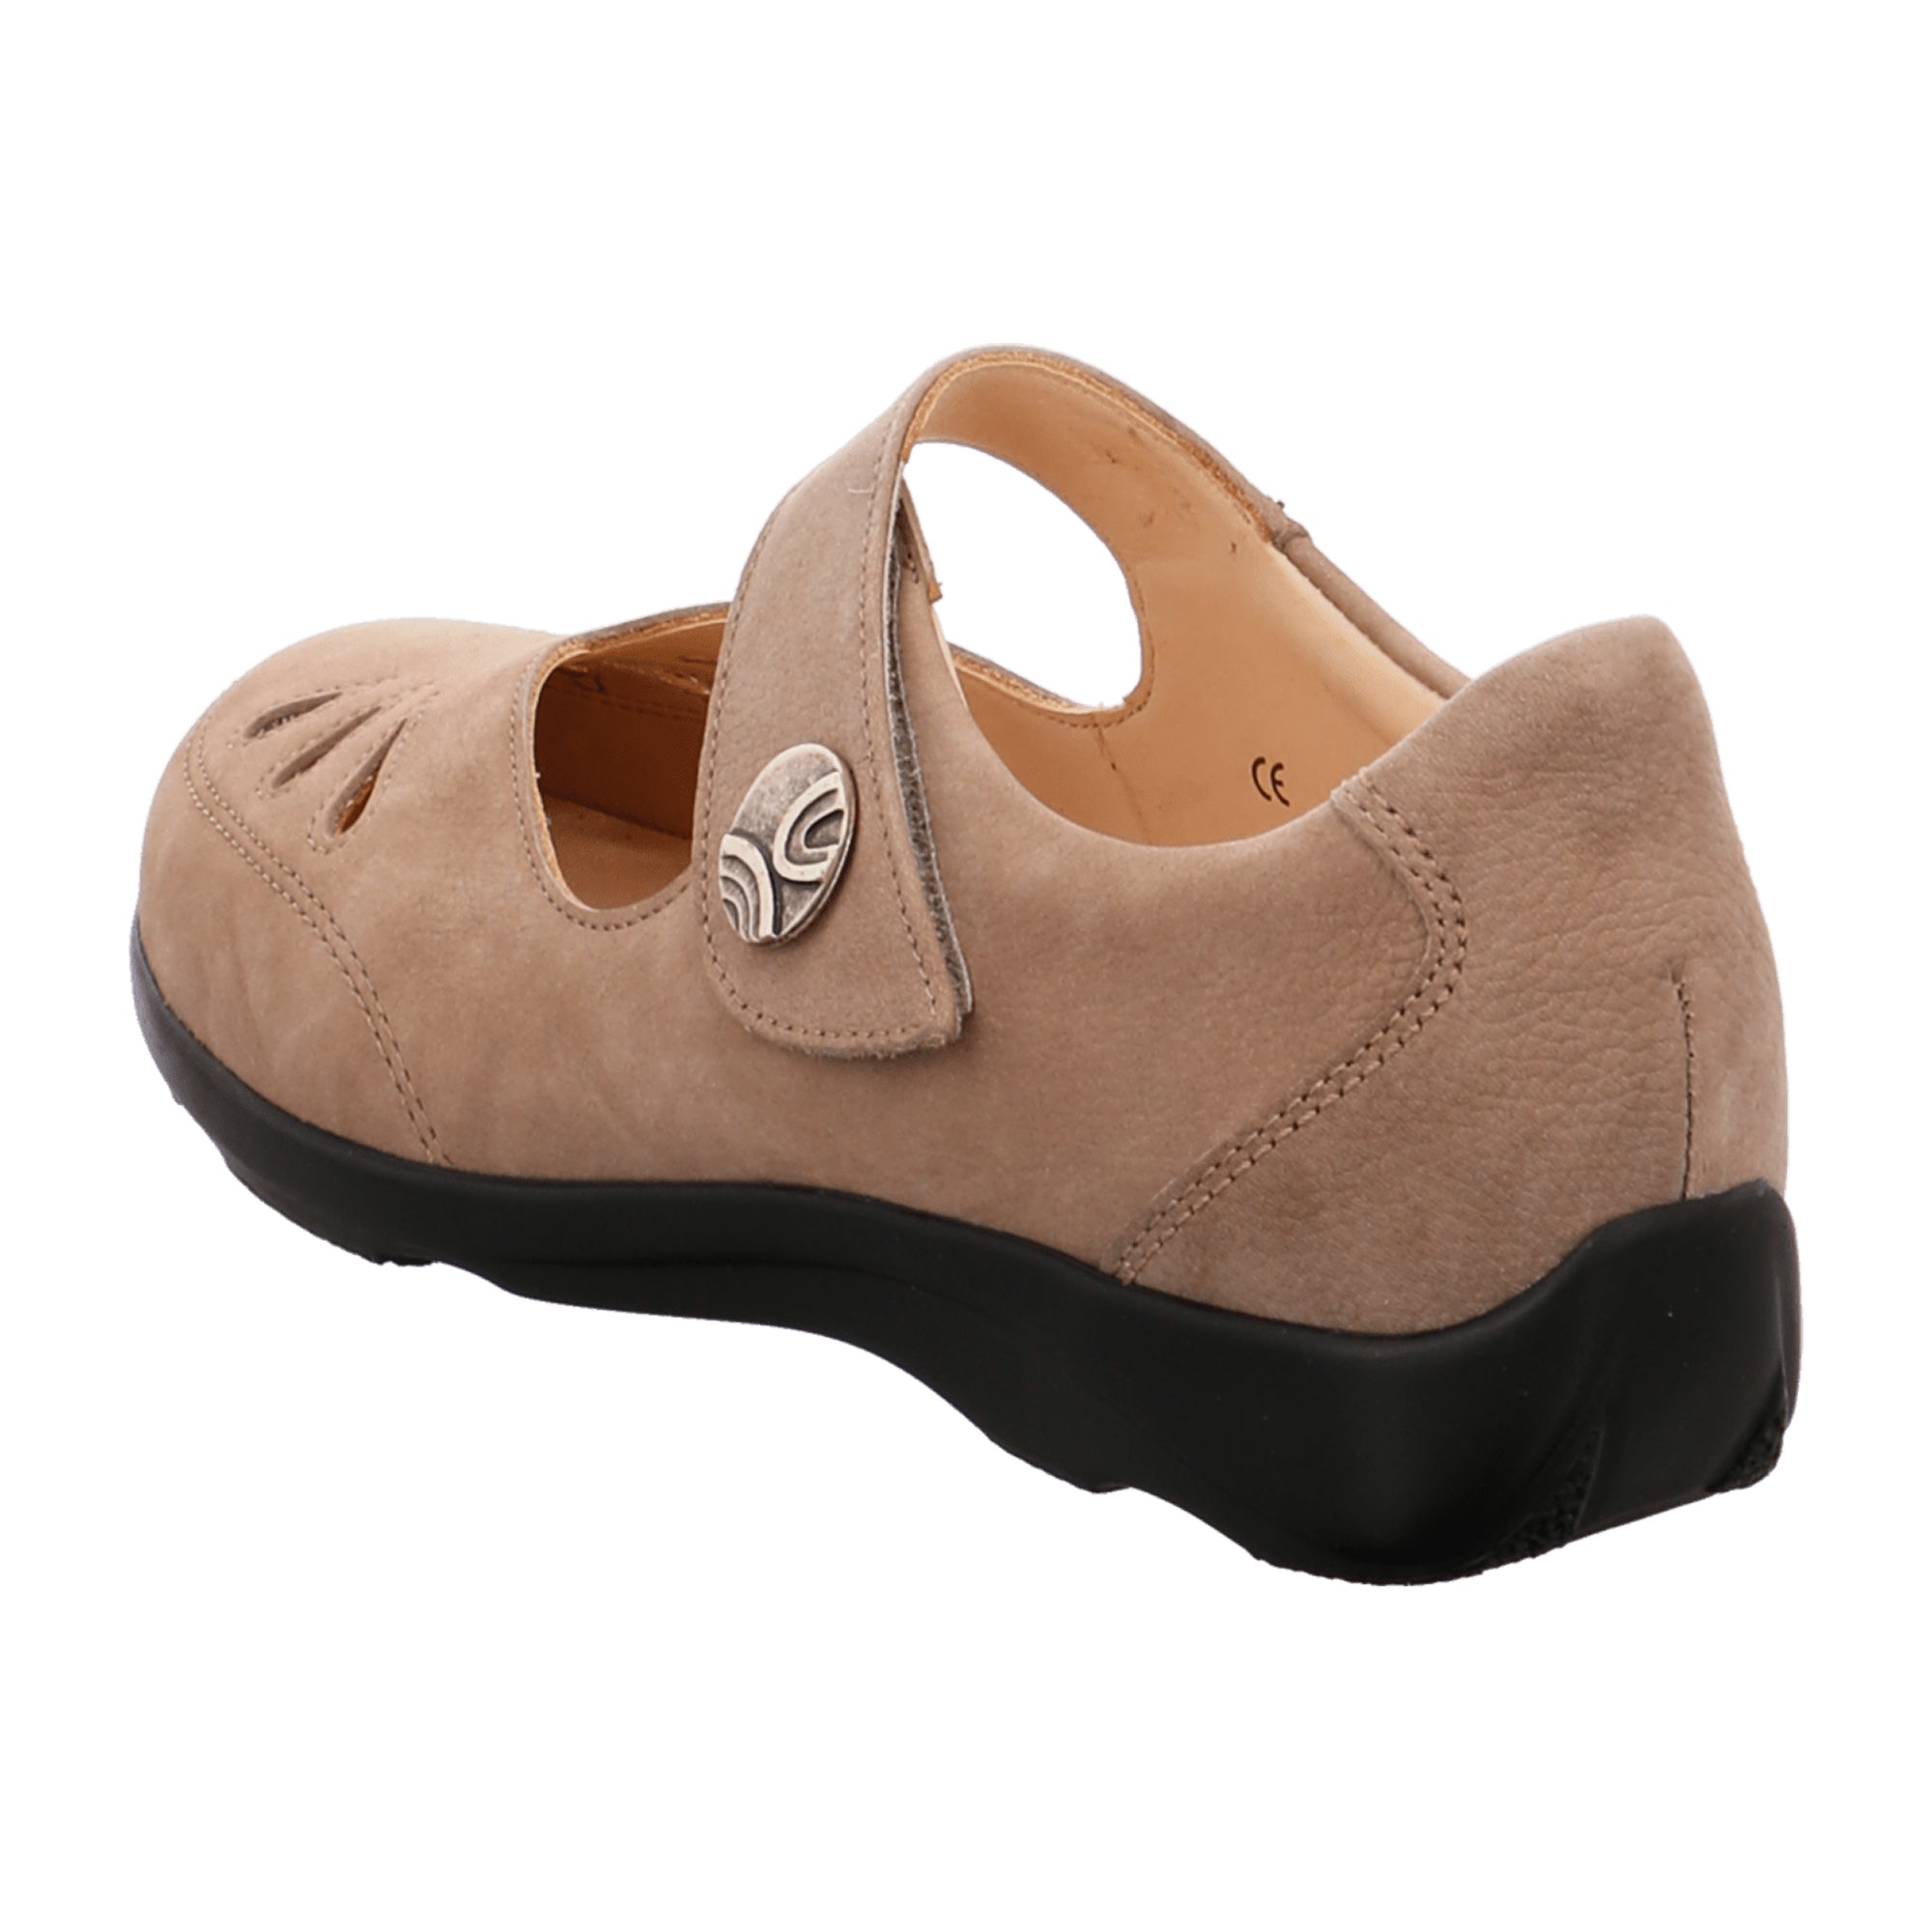 Finn Comfort Brac-S Women's Comfortable Sandals, Beige - Stylish & Durable